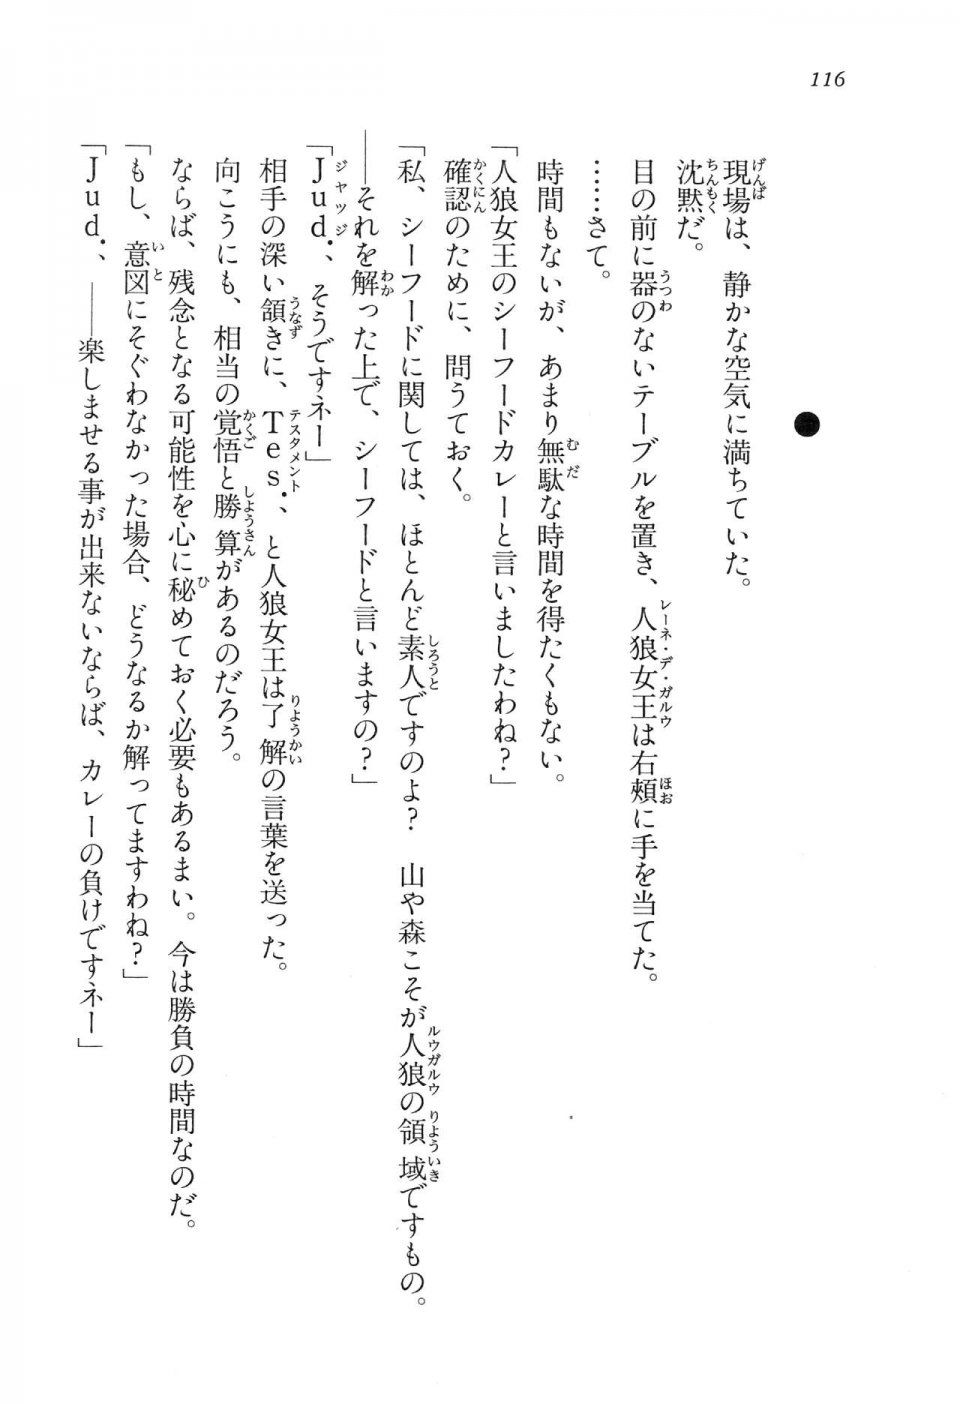 Kyoukai Senjou no Horizon LN Vol 15(6C) Part 1 - Photo #116